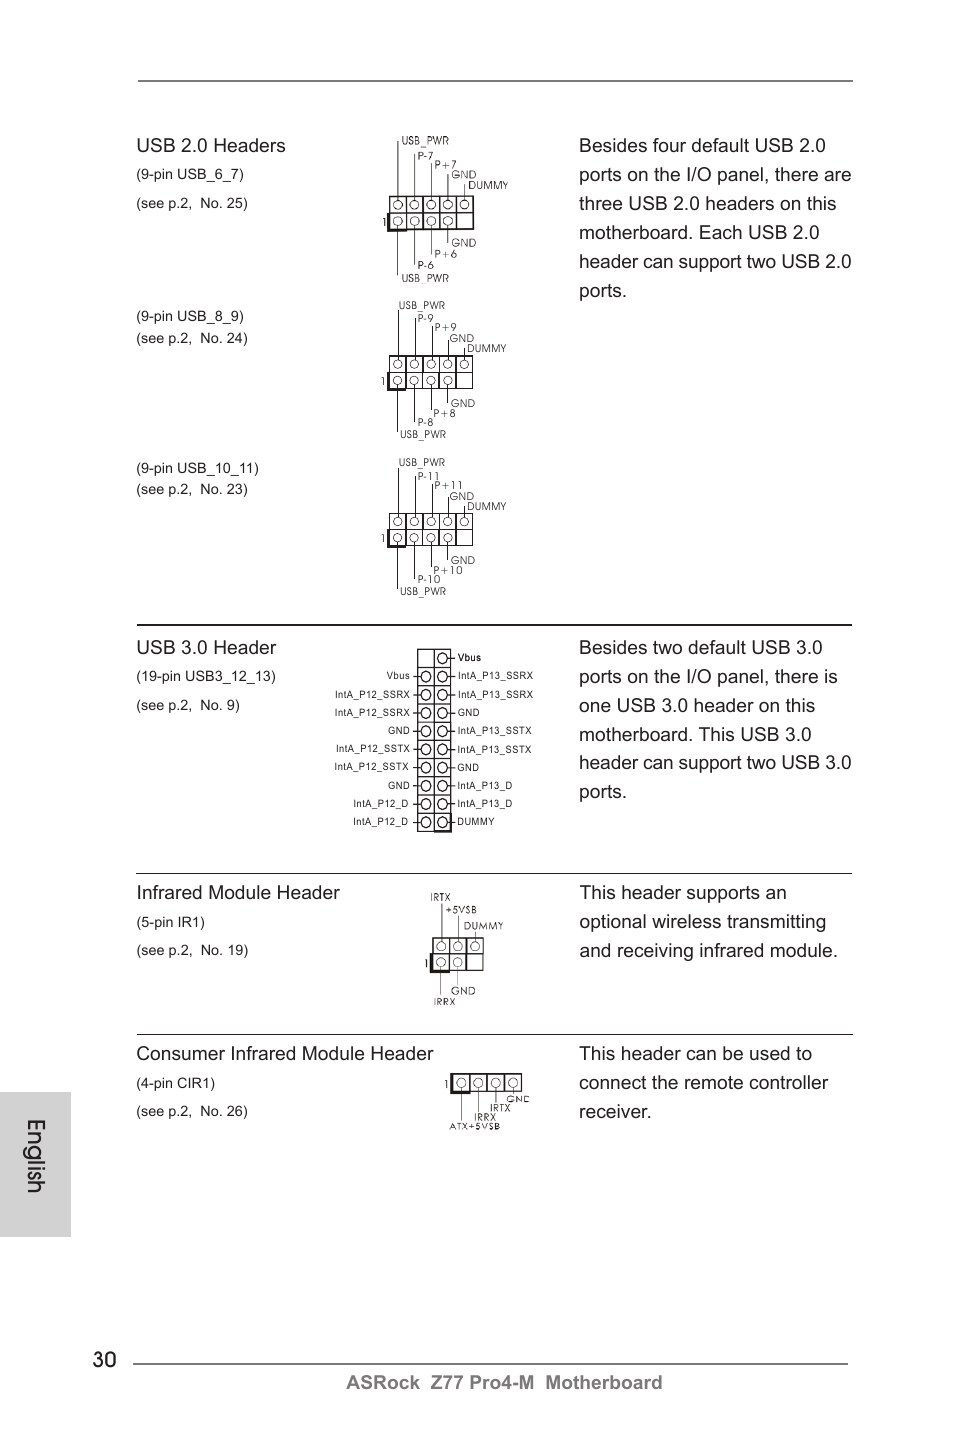 English, Asrock z77 pro4-m motherboard, Usb 2.0 headers besides four  default usb 2.0 | ASRock Z77 Pro4-M User Manual | Page 30 / 230 | Original  mode